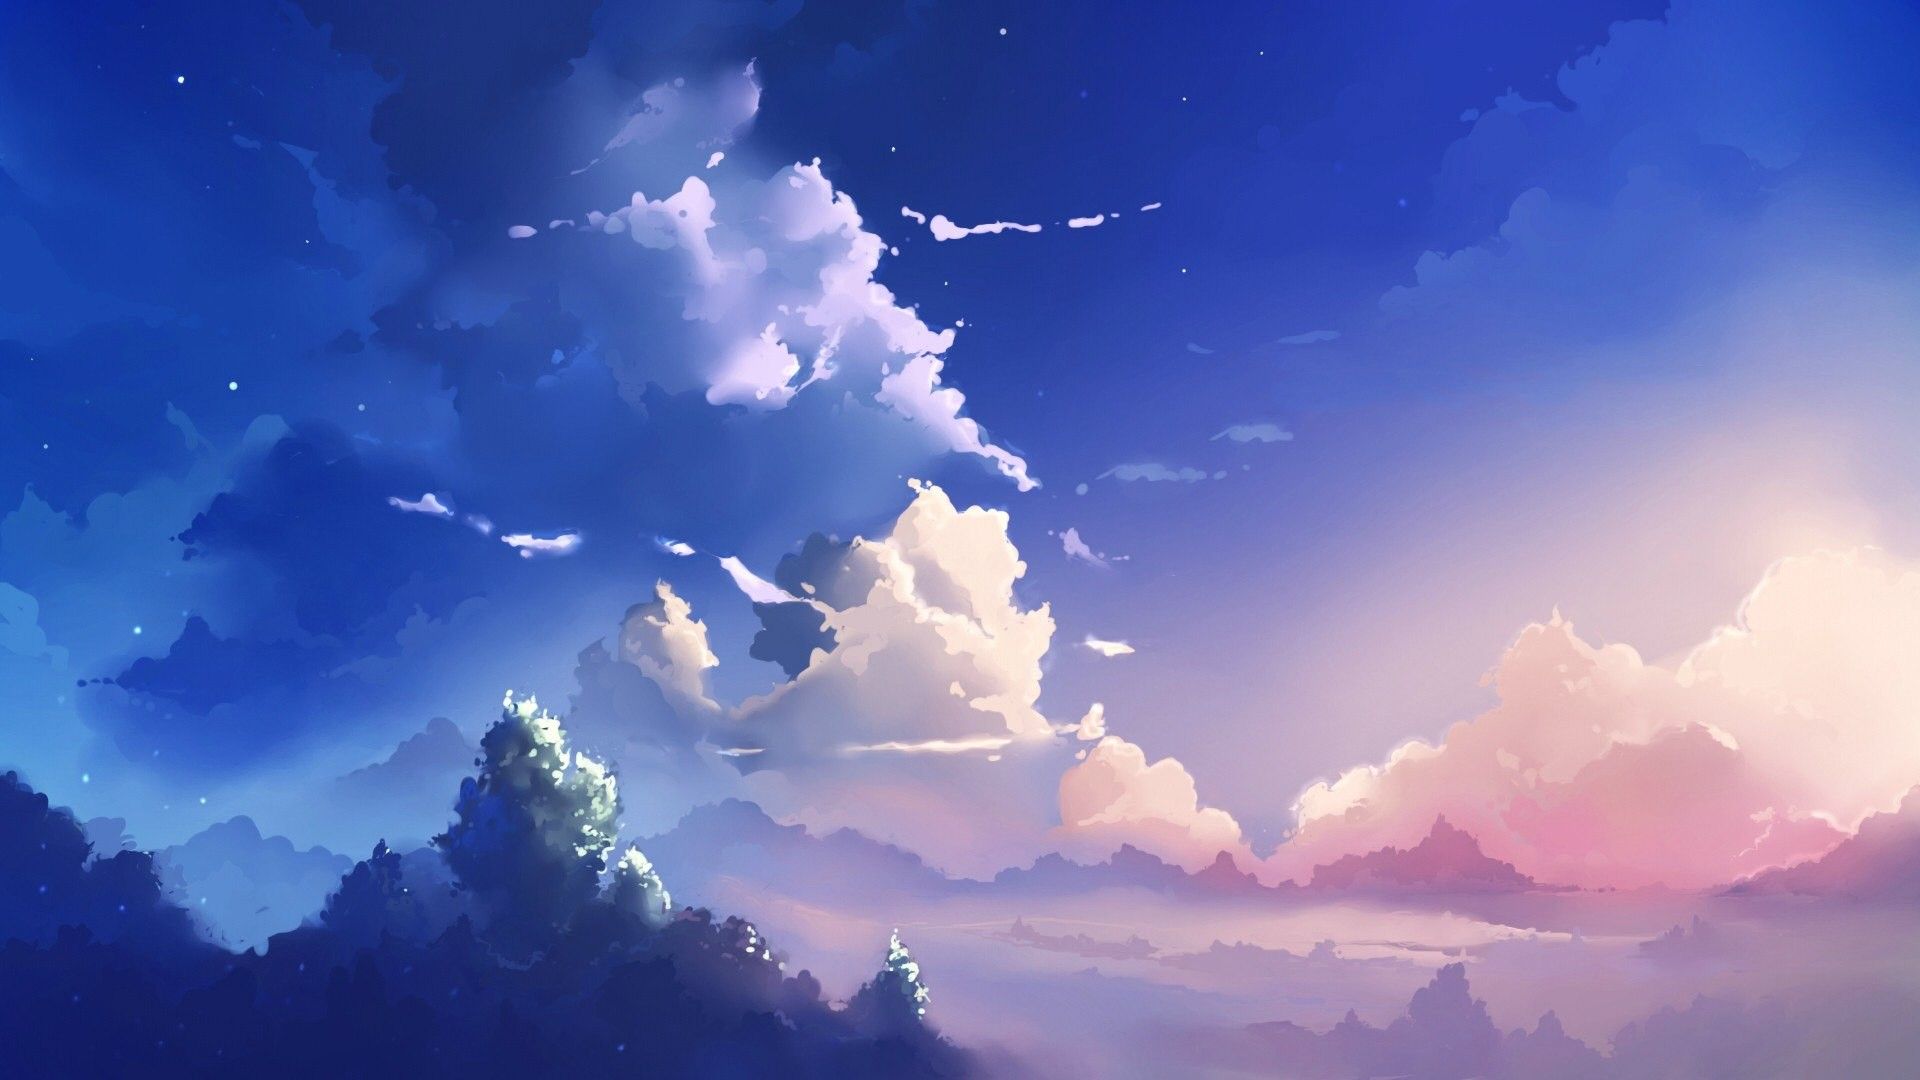 Clouds Anime Scenery Art Wallpaper 4K PC Desktop 6000b